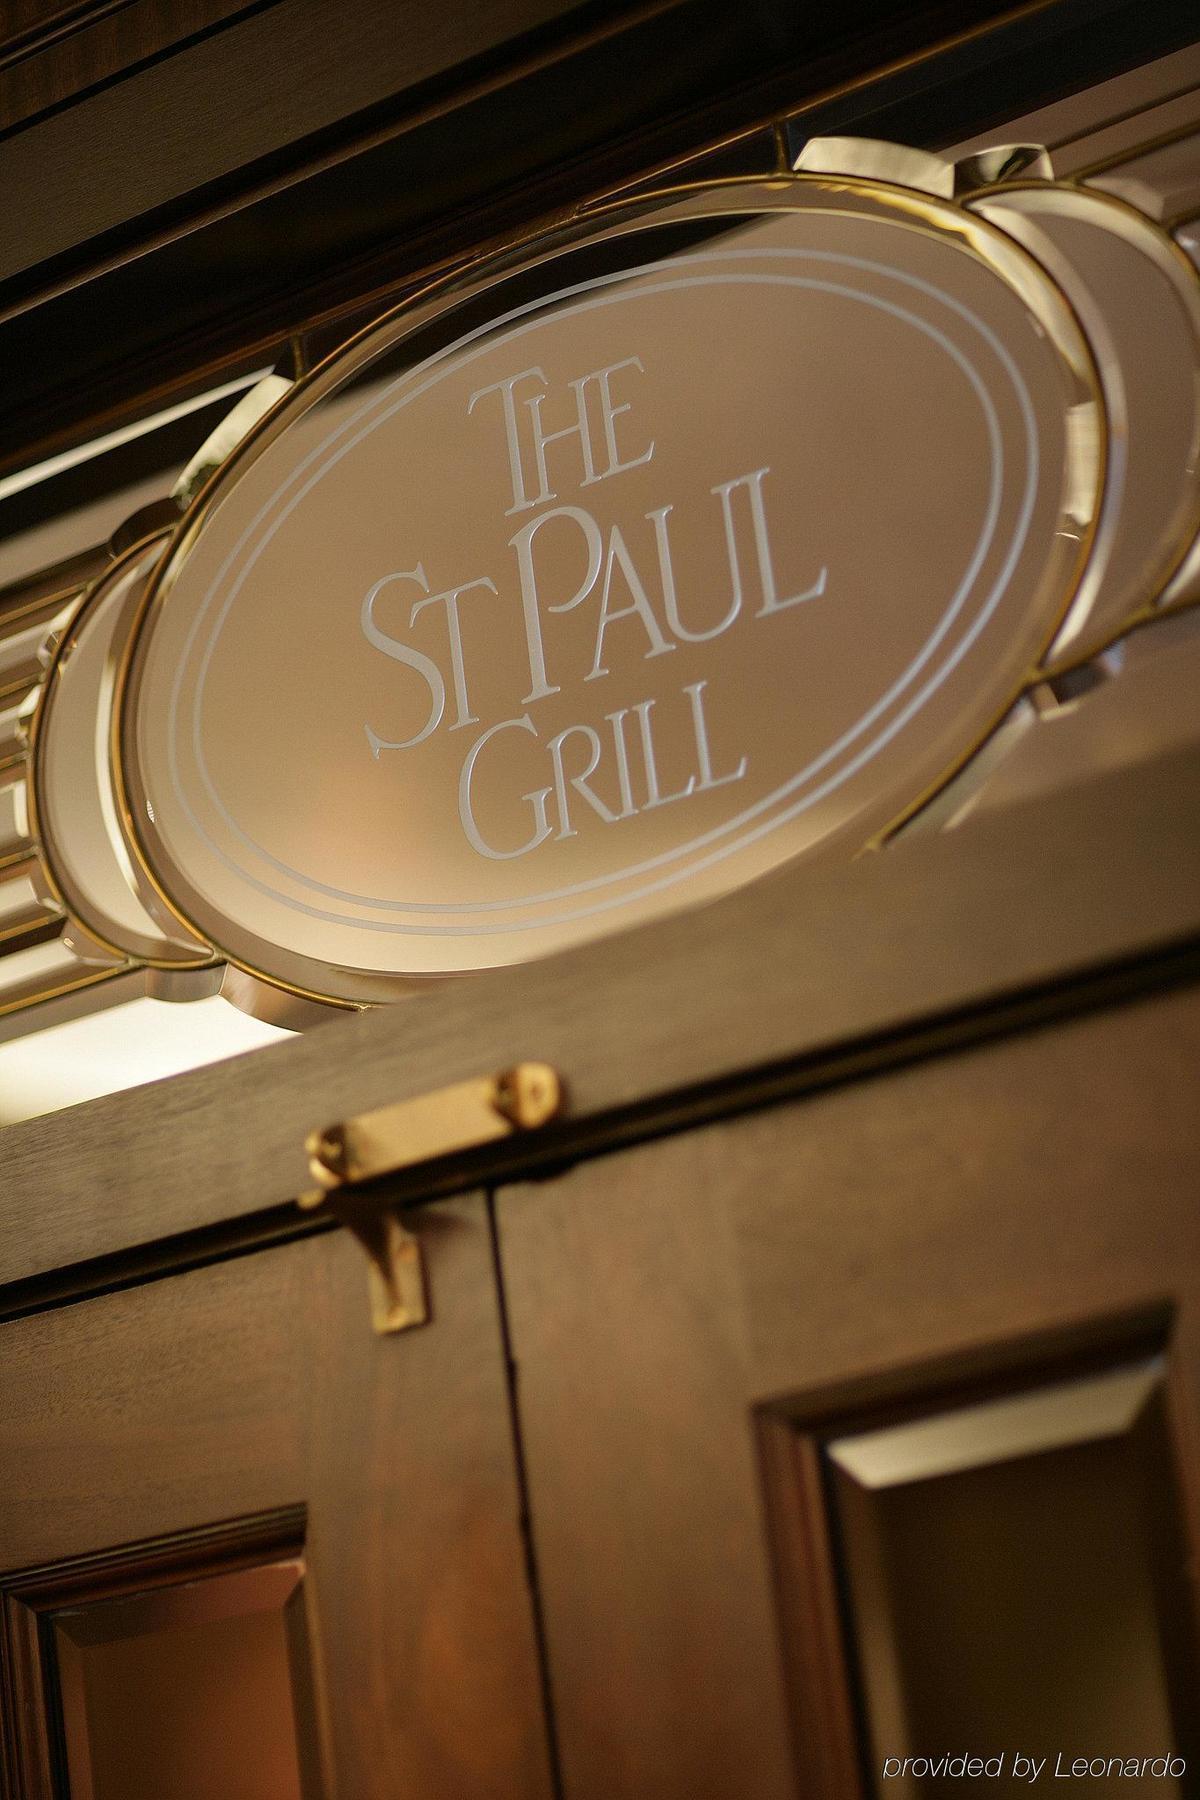 The Saint Paul Hotel Restaurant photo